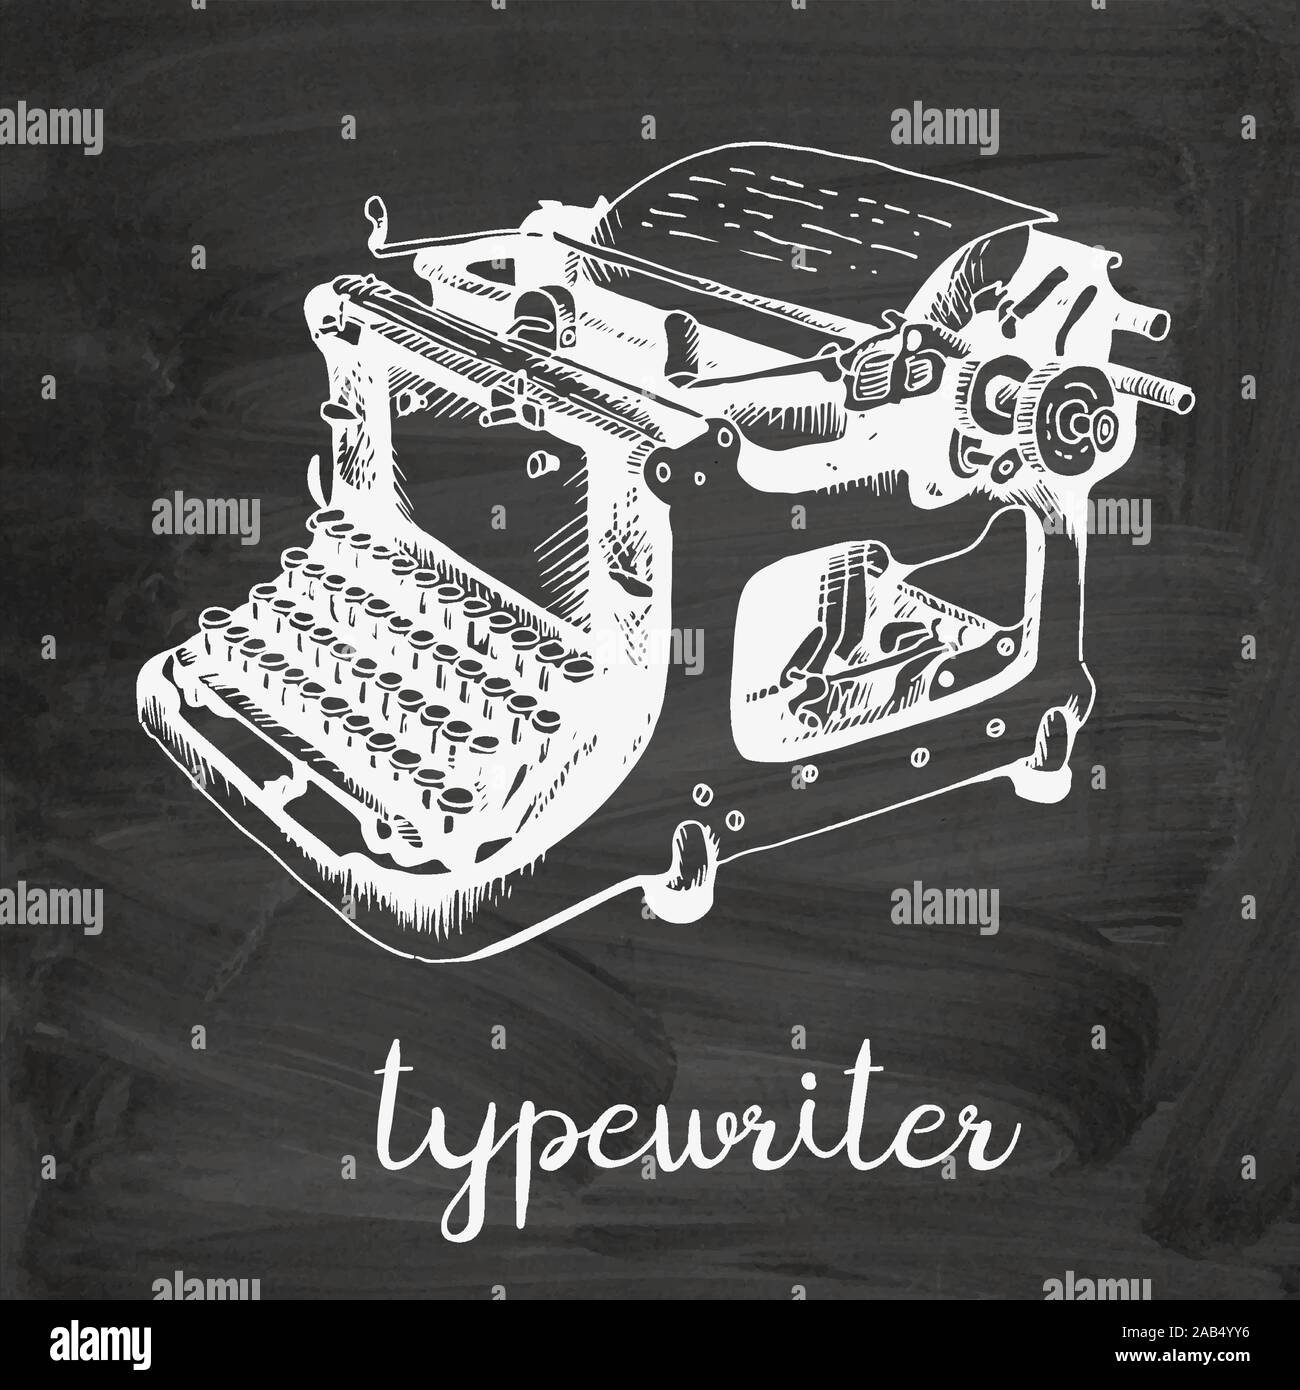 Typewriter hand drawn sketch, vector illustration on chalkboard background Stock Vector